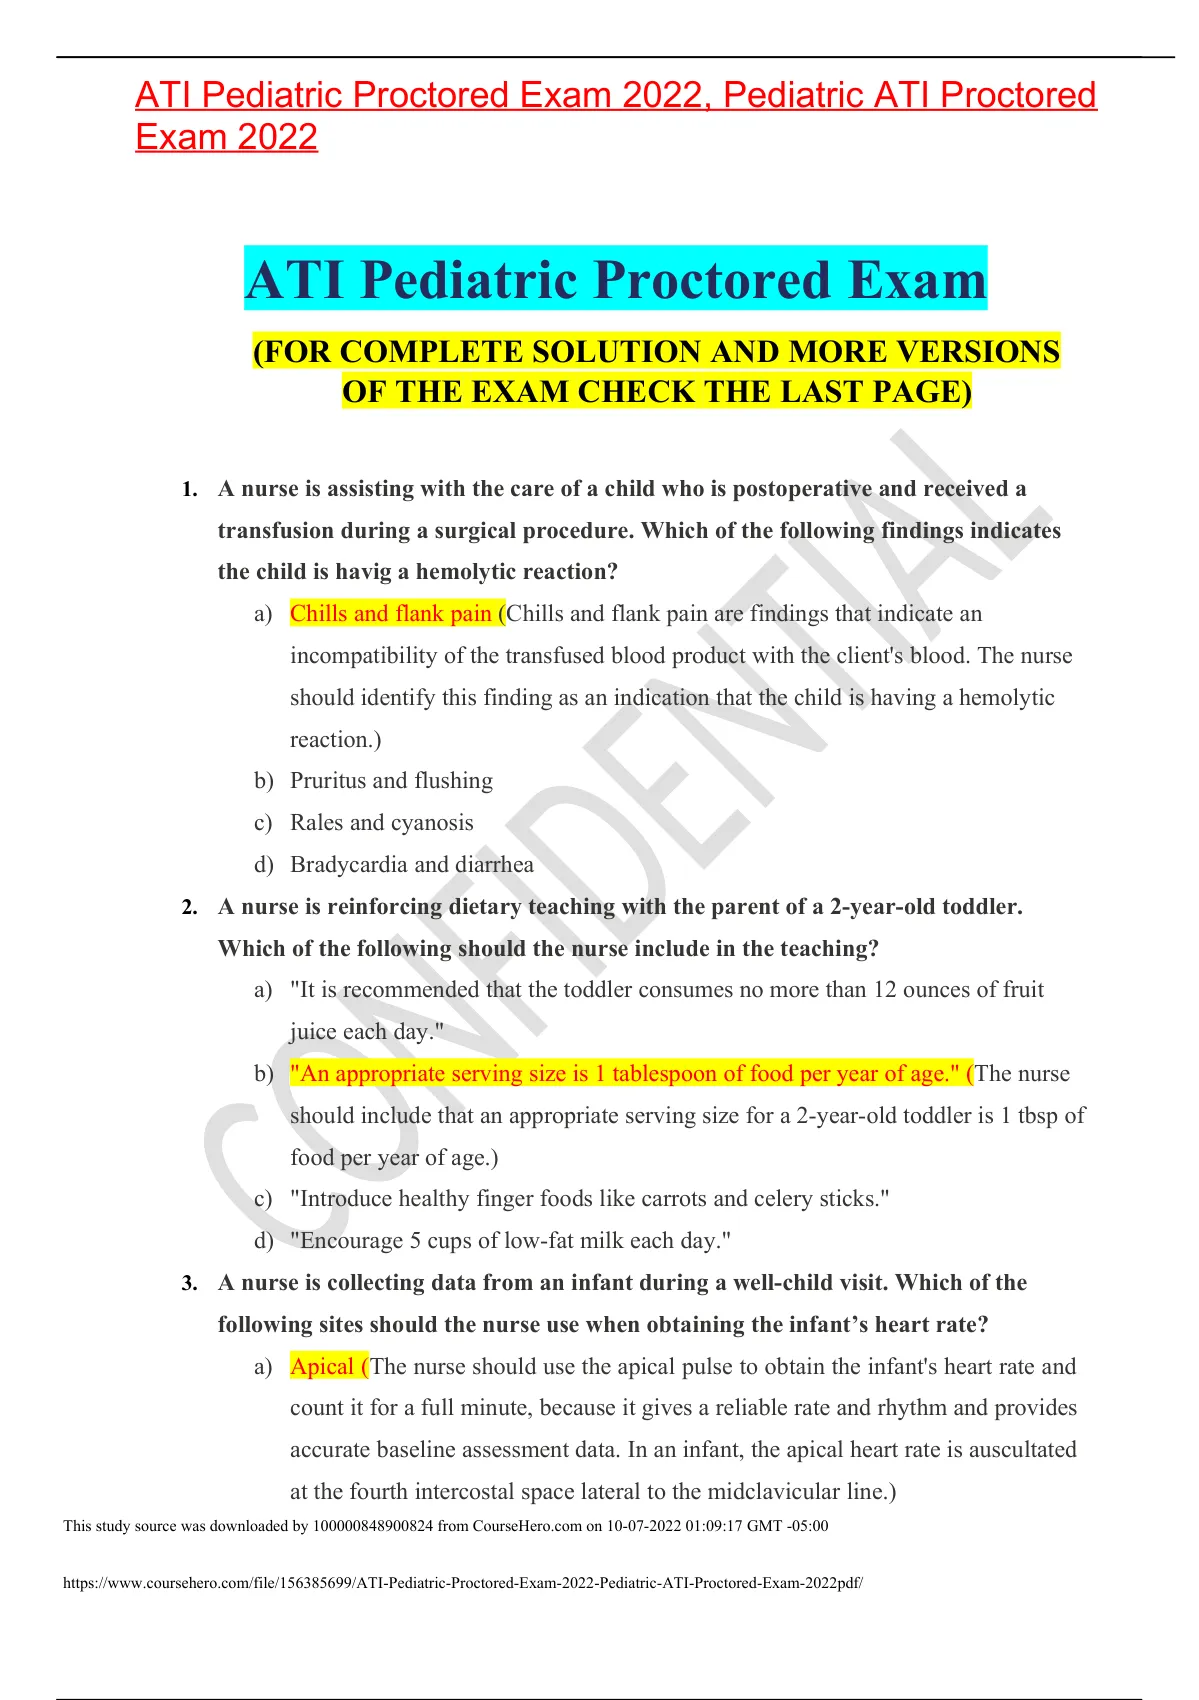 ATI Pediatric Proctored Exam 2022, Pediatric ATI Proctored Exam 2022